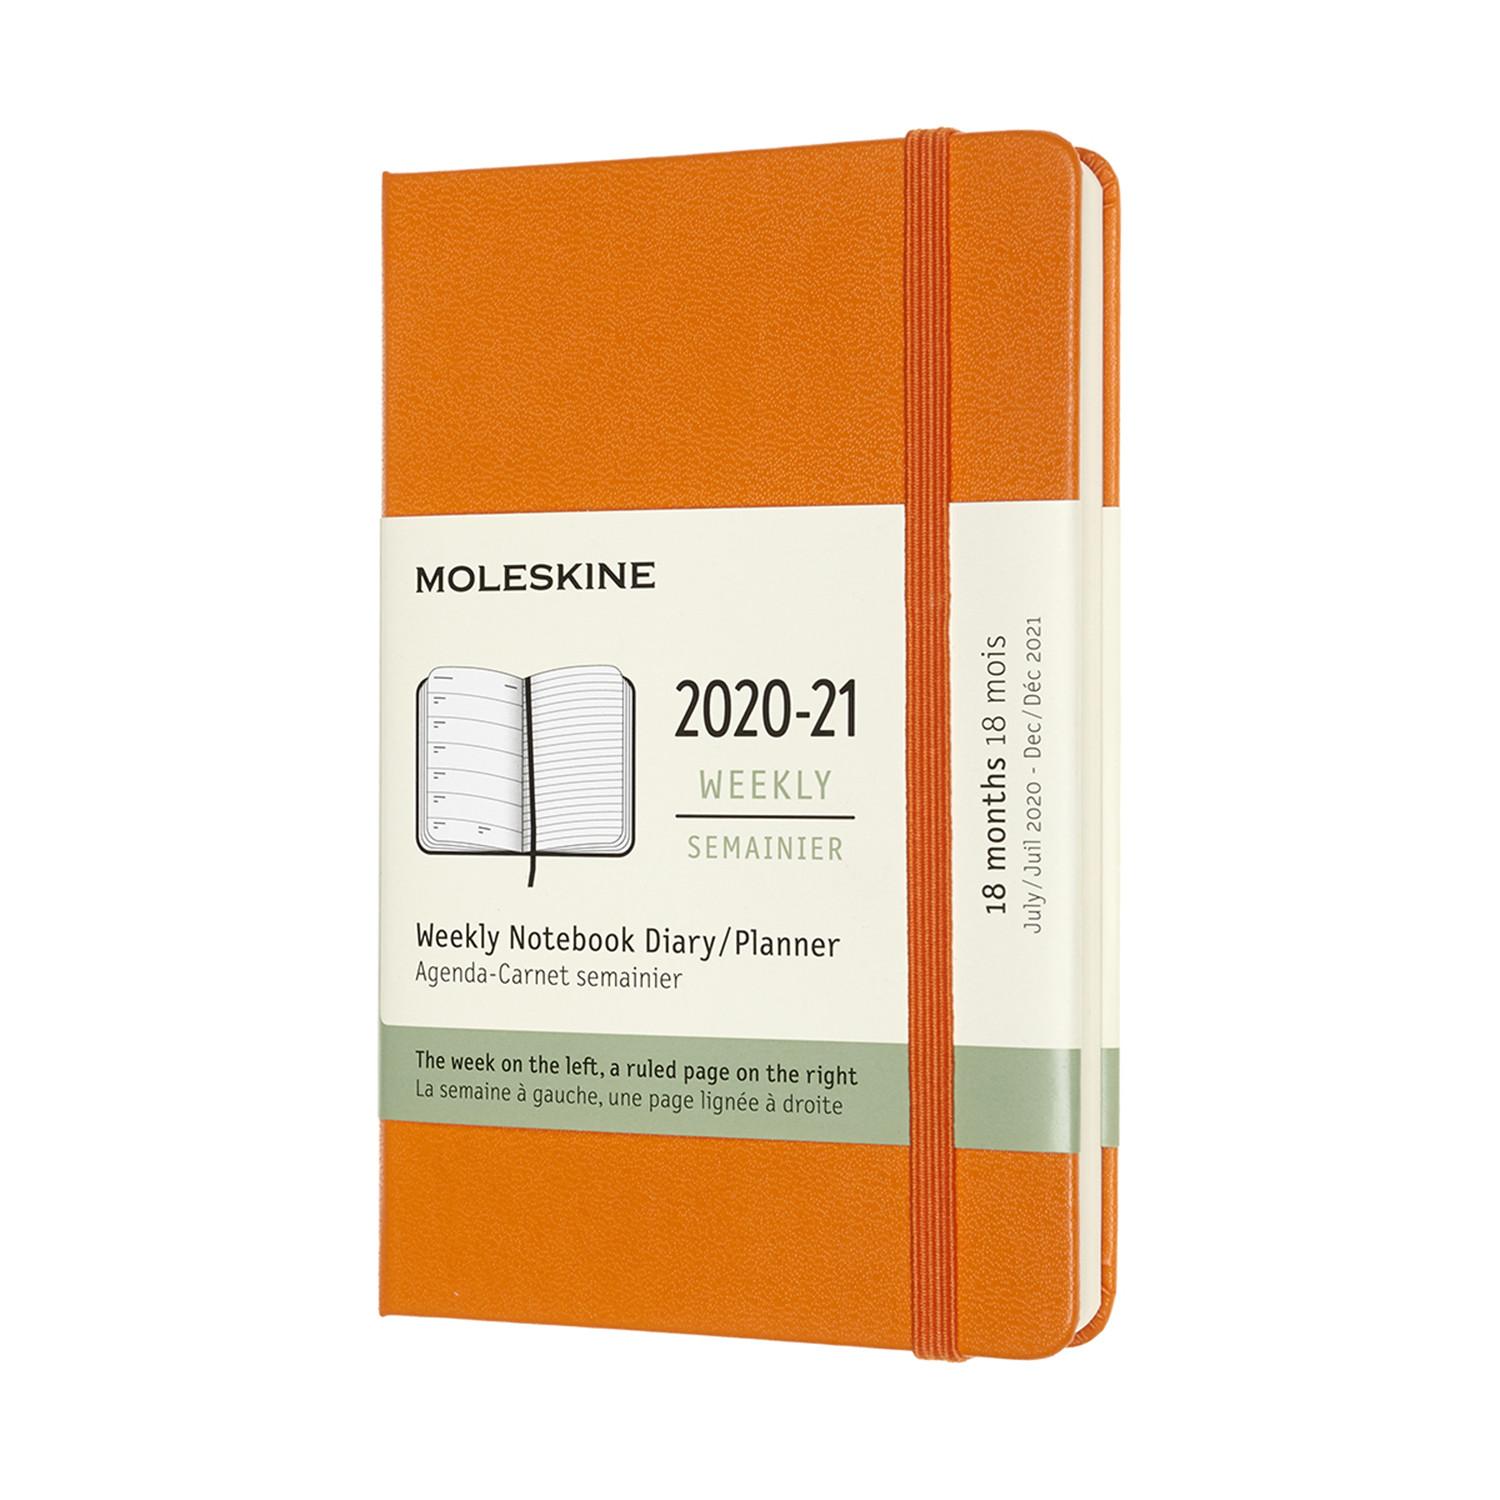 Moleskine 2020-21 18M Weekly Notebook Pocket CadmiUM ORANGE HARD COVER